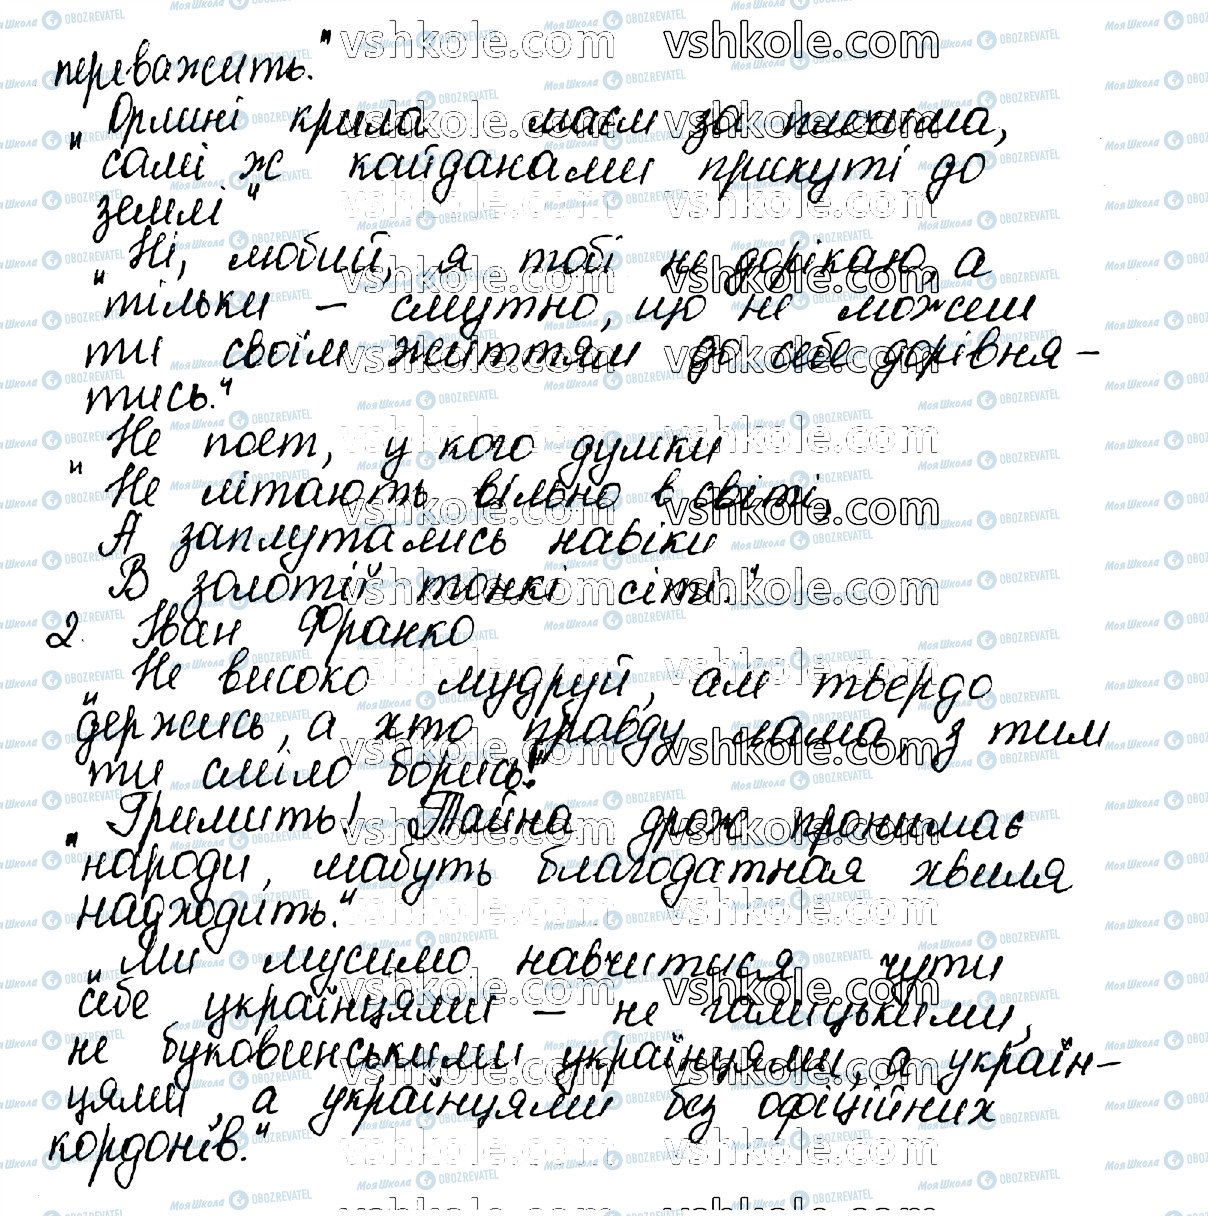 ГДЗ Укр мова 10 класс страница 254